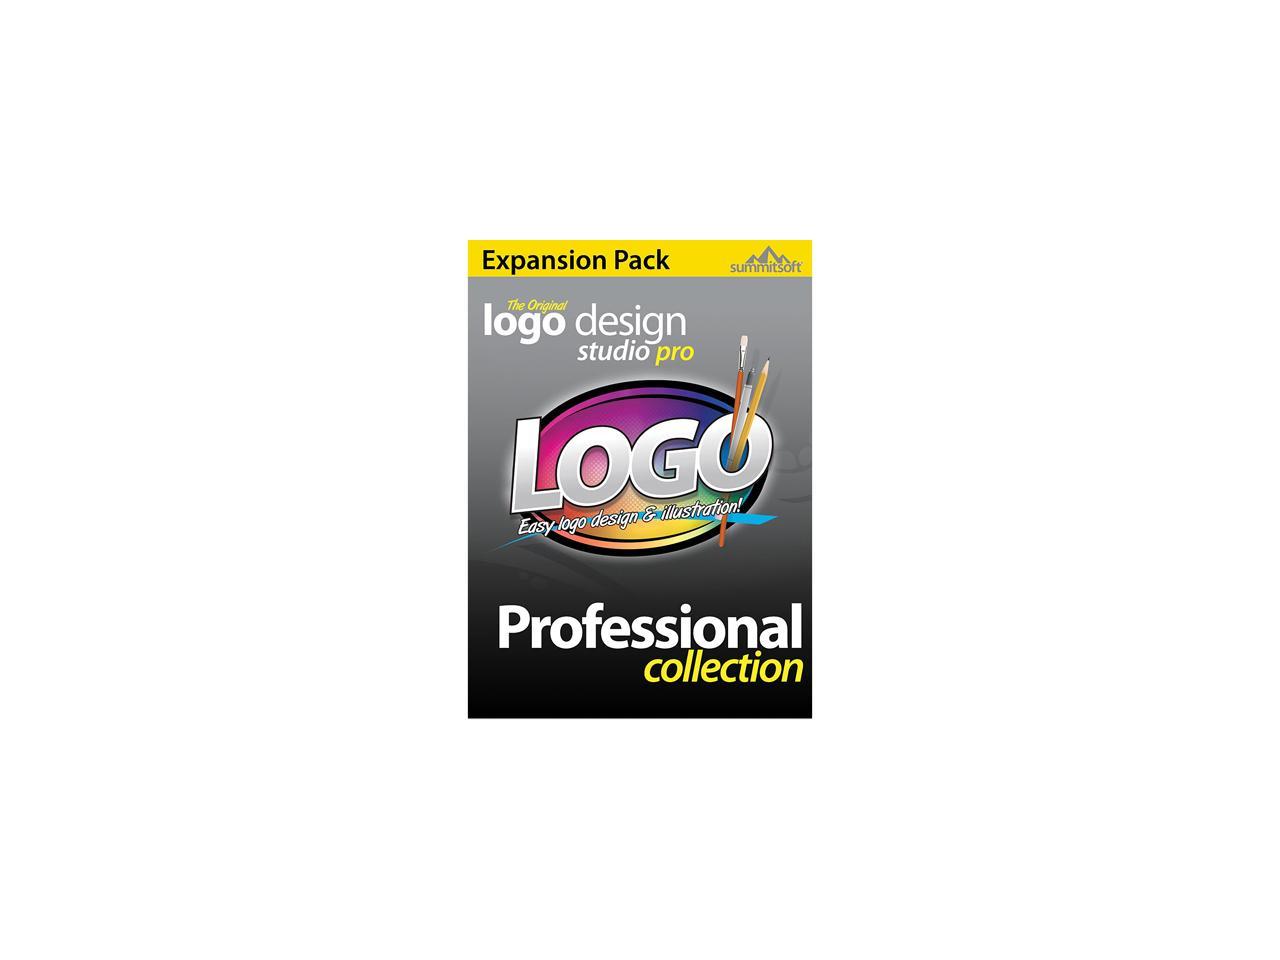 summitsoft logo design studio pro professional expansion pack